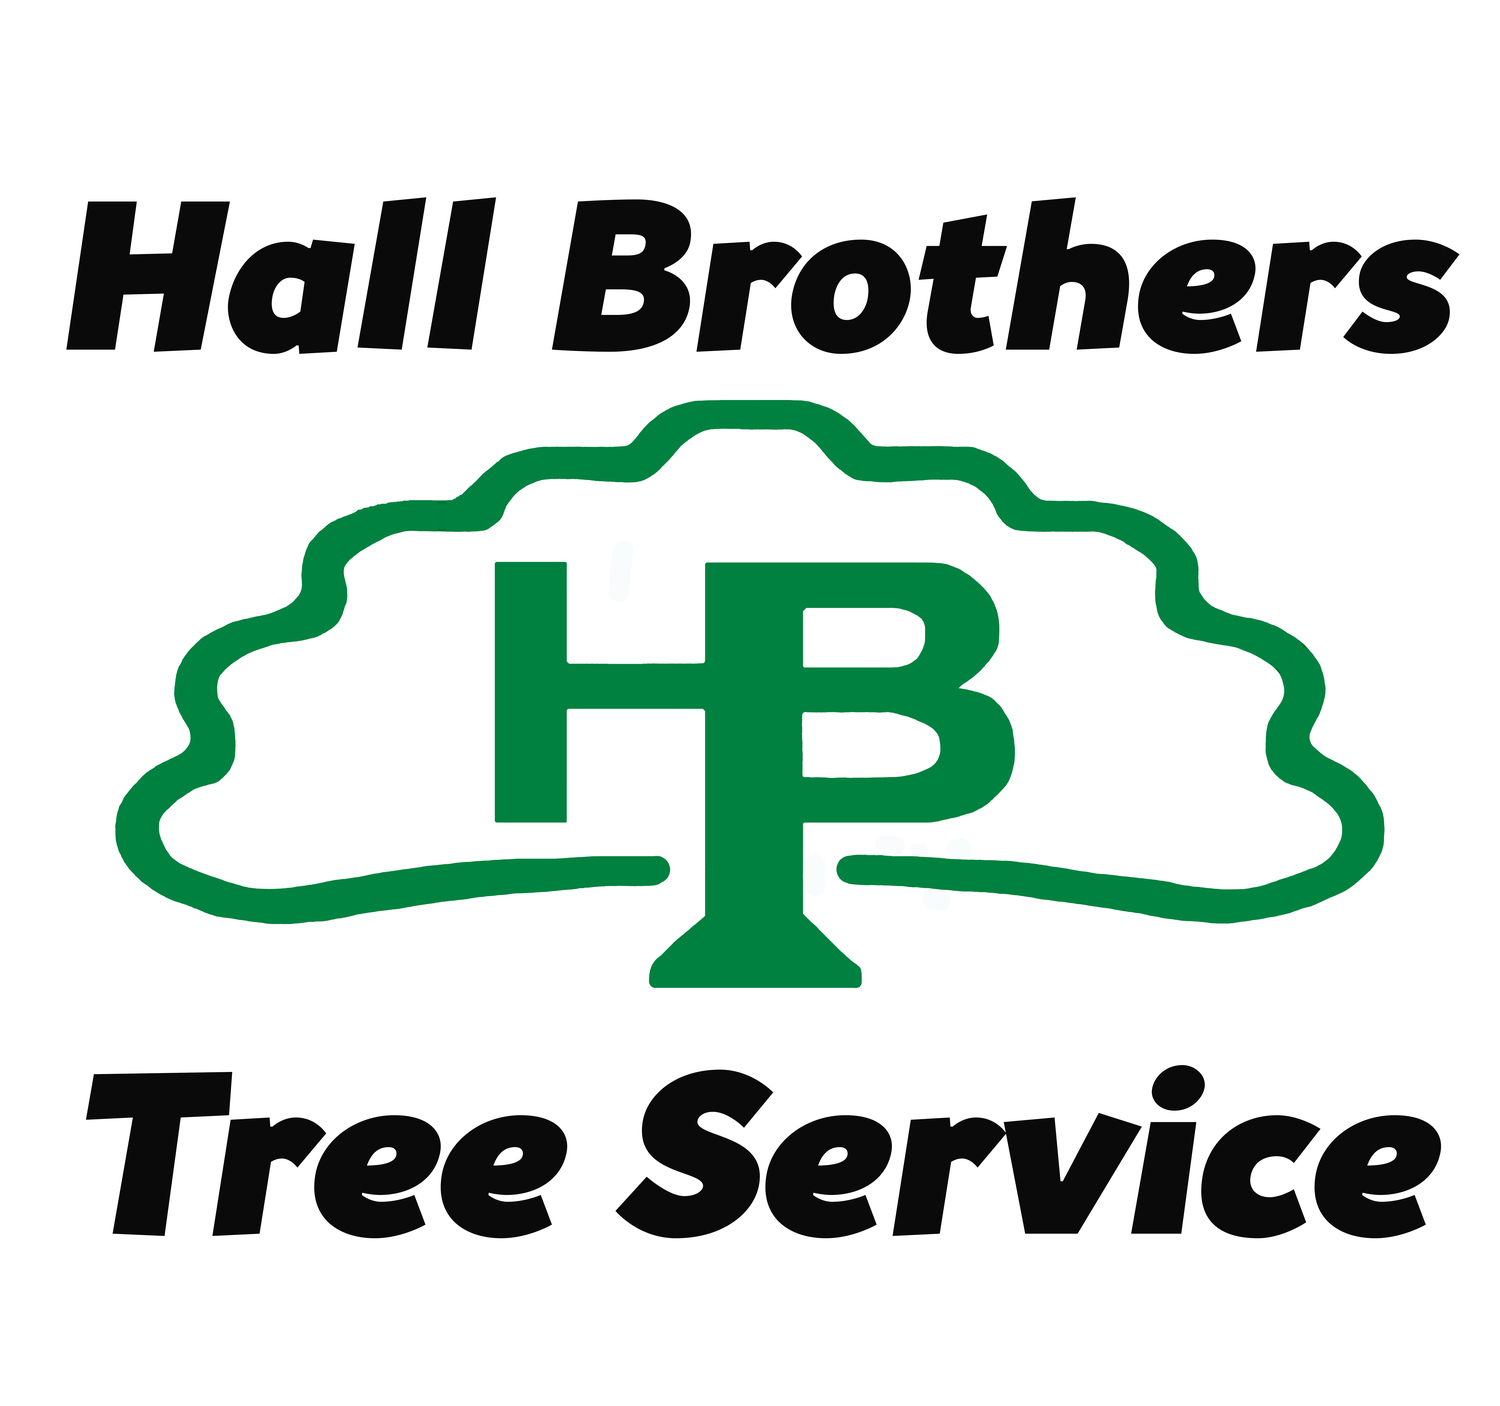 Hall Brothers Tree Service